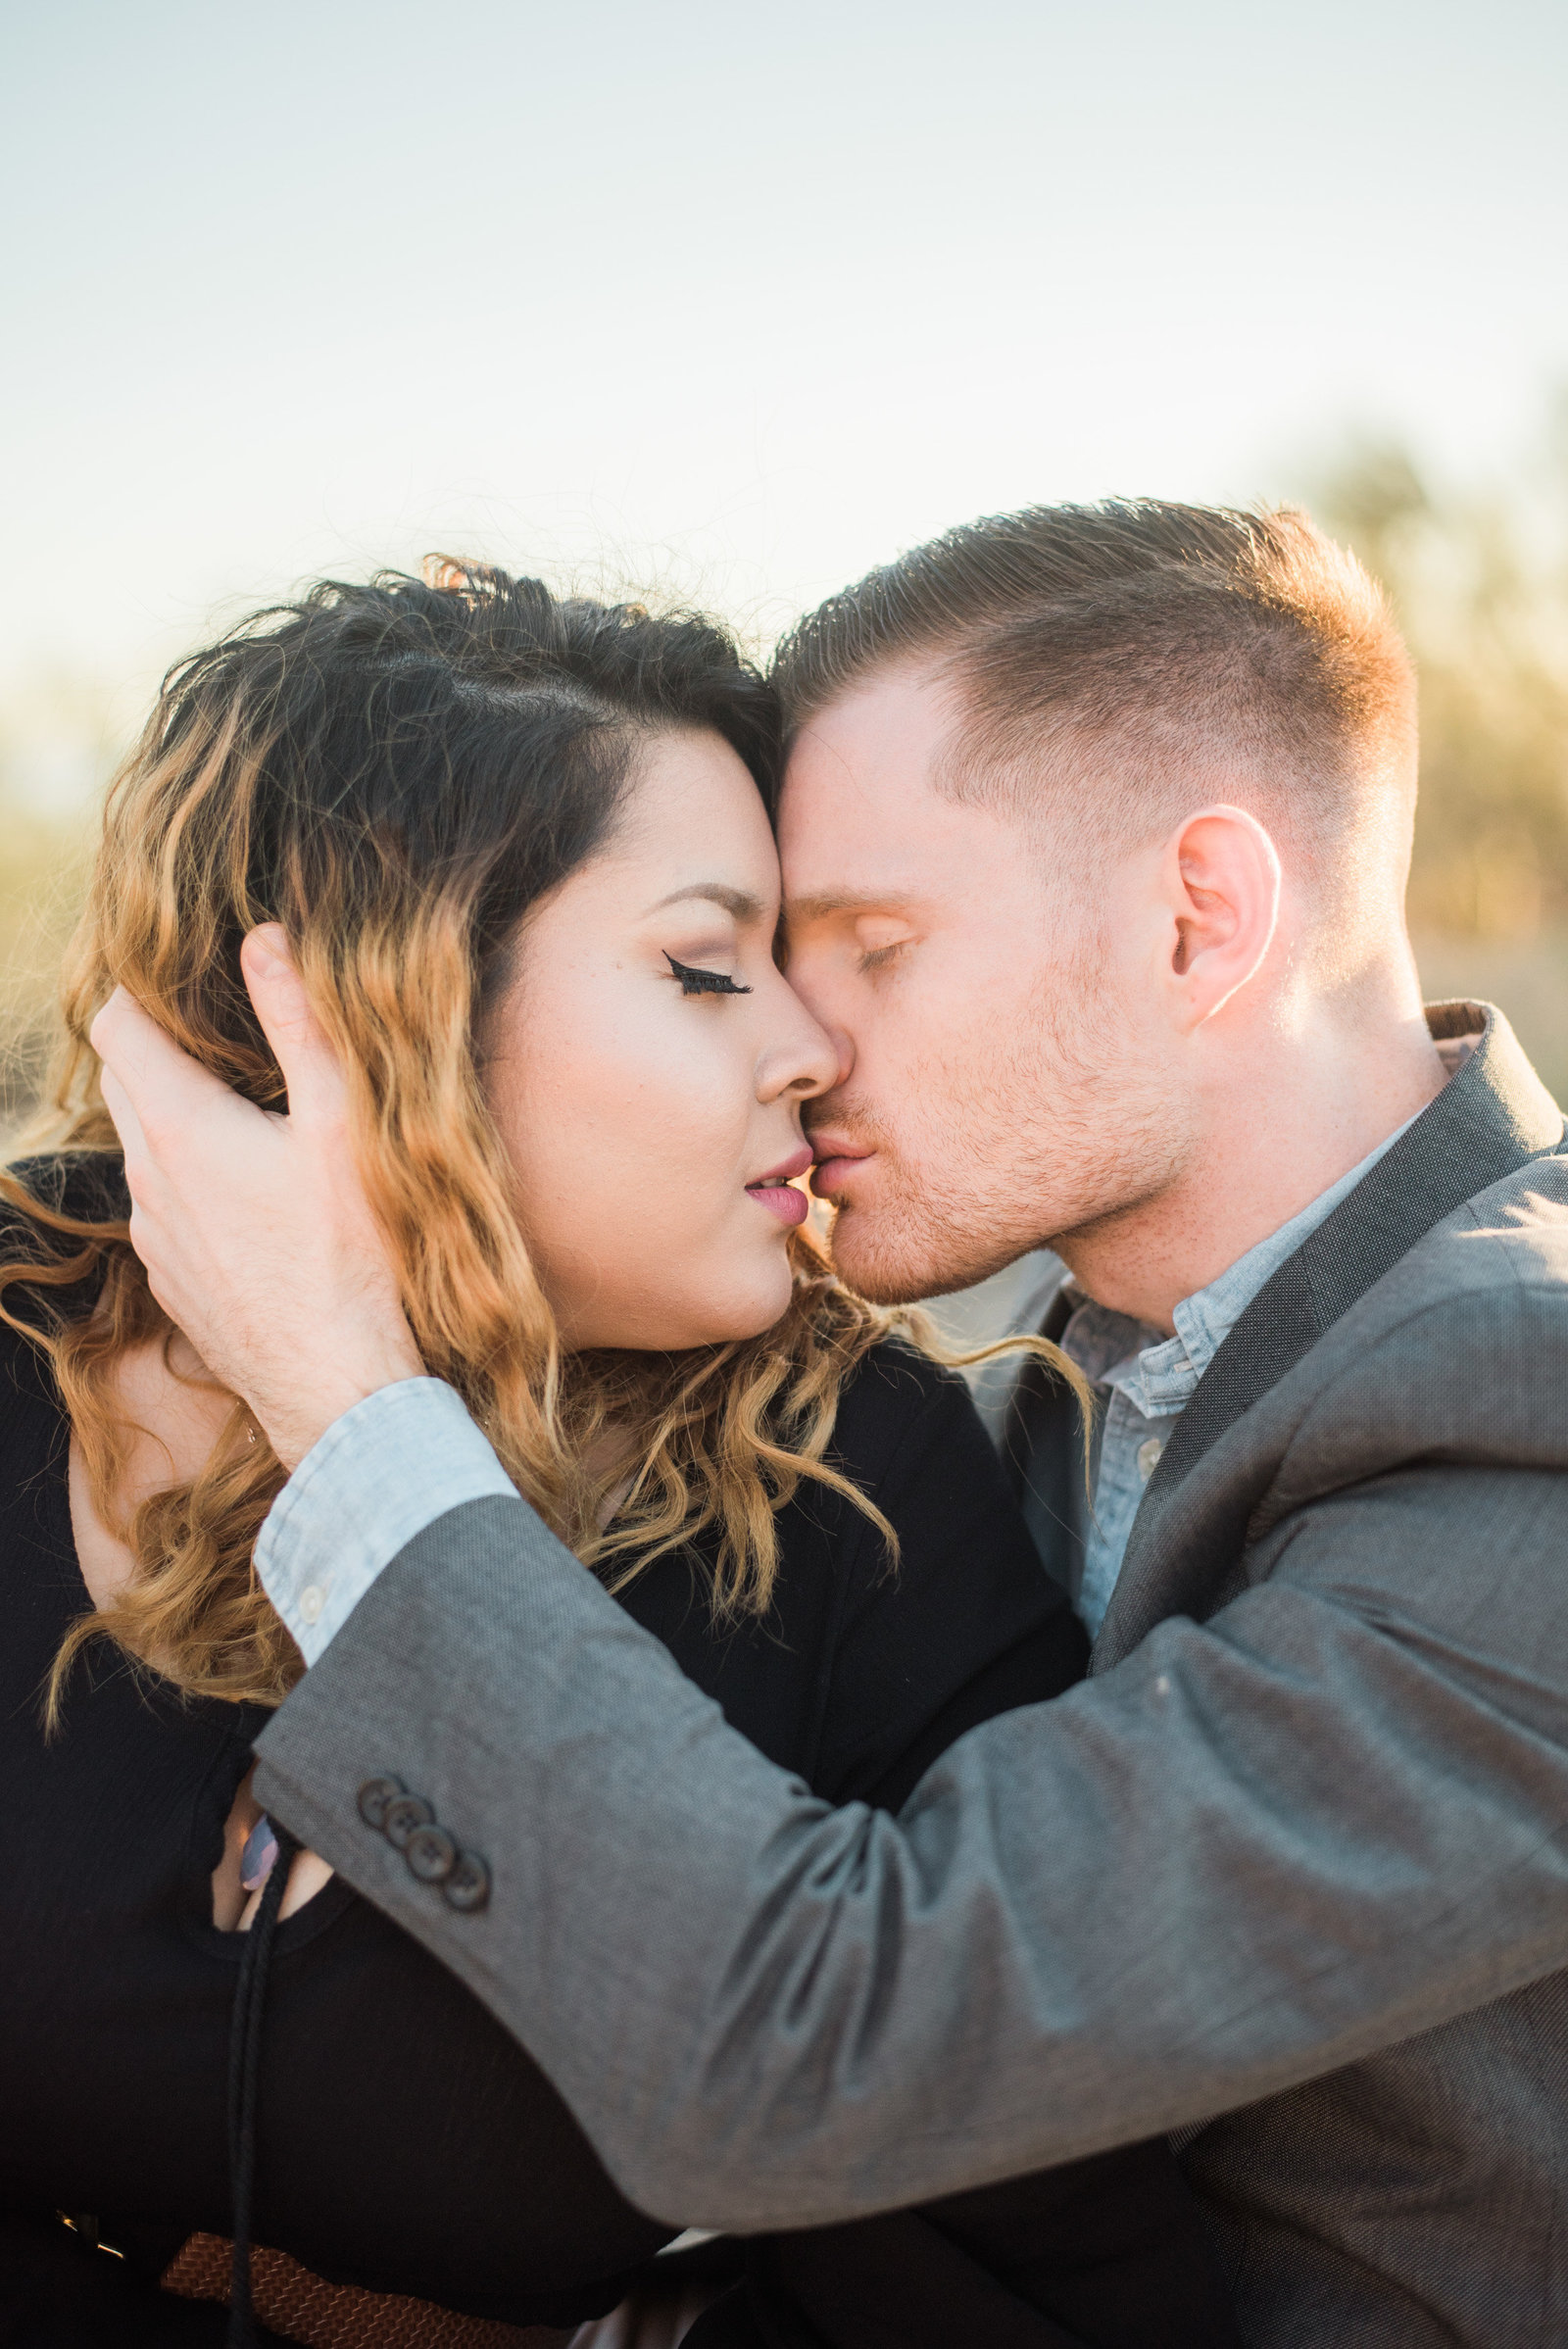 Gates Pass Tucson Desert Engagement Session of Engaged Couple Kissing at Sunset | Tucson Wedding Photographer | West End Photography